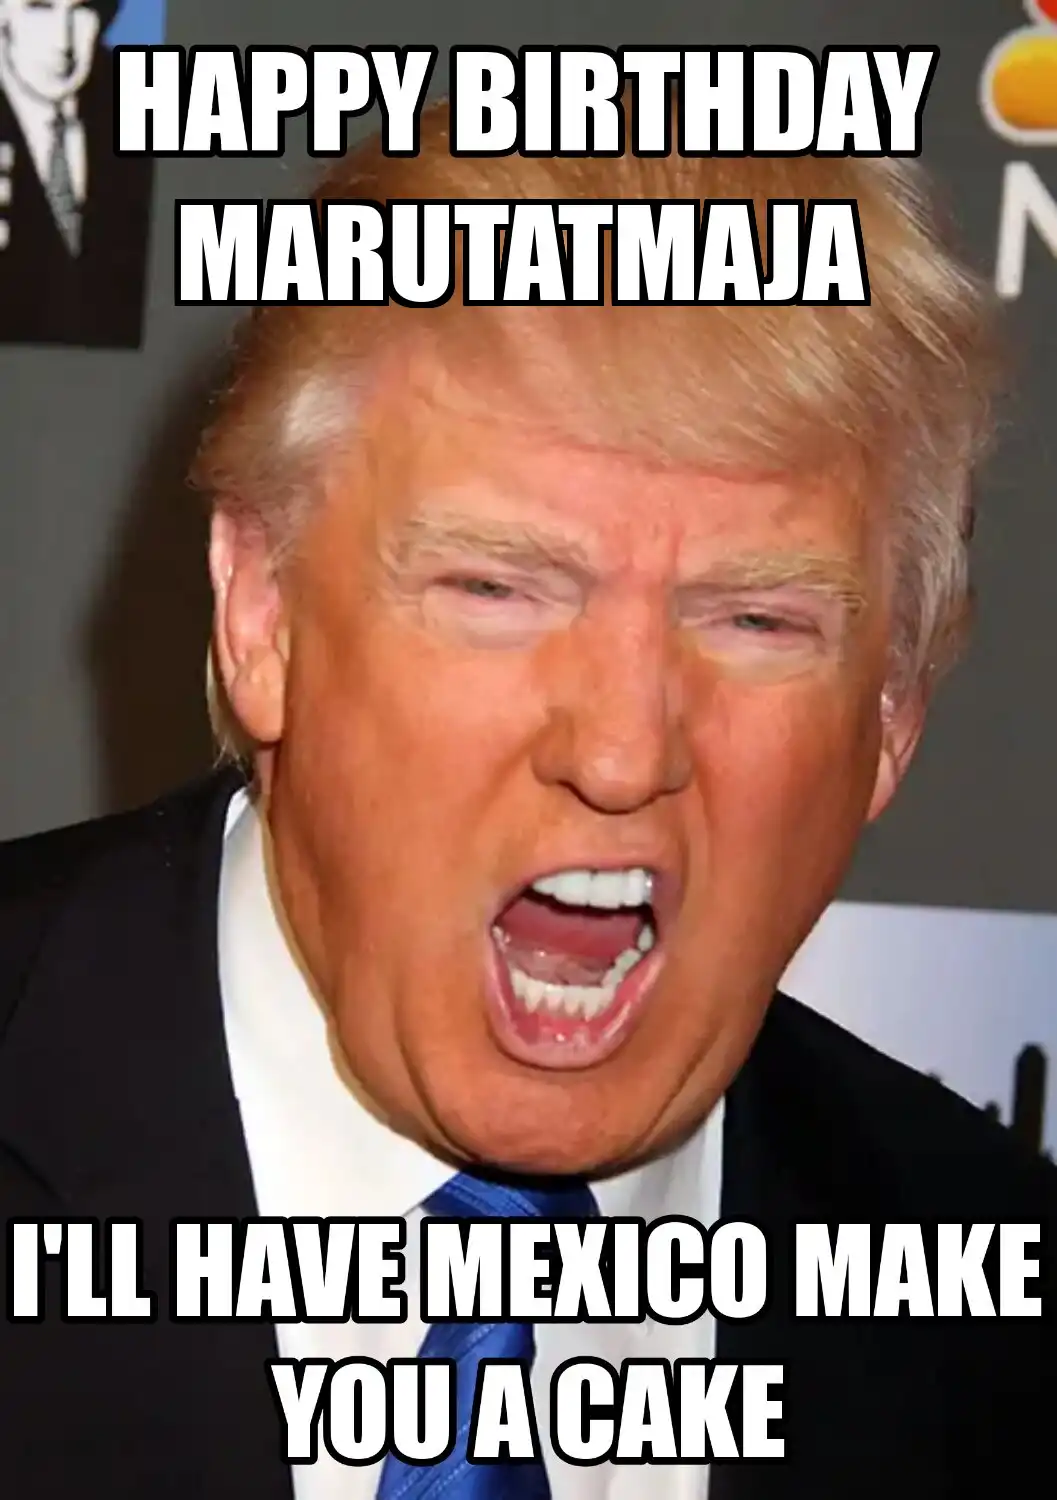 Happy Birthday Marutatmaja Mexico Make You A Cake Meme